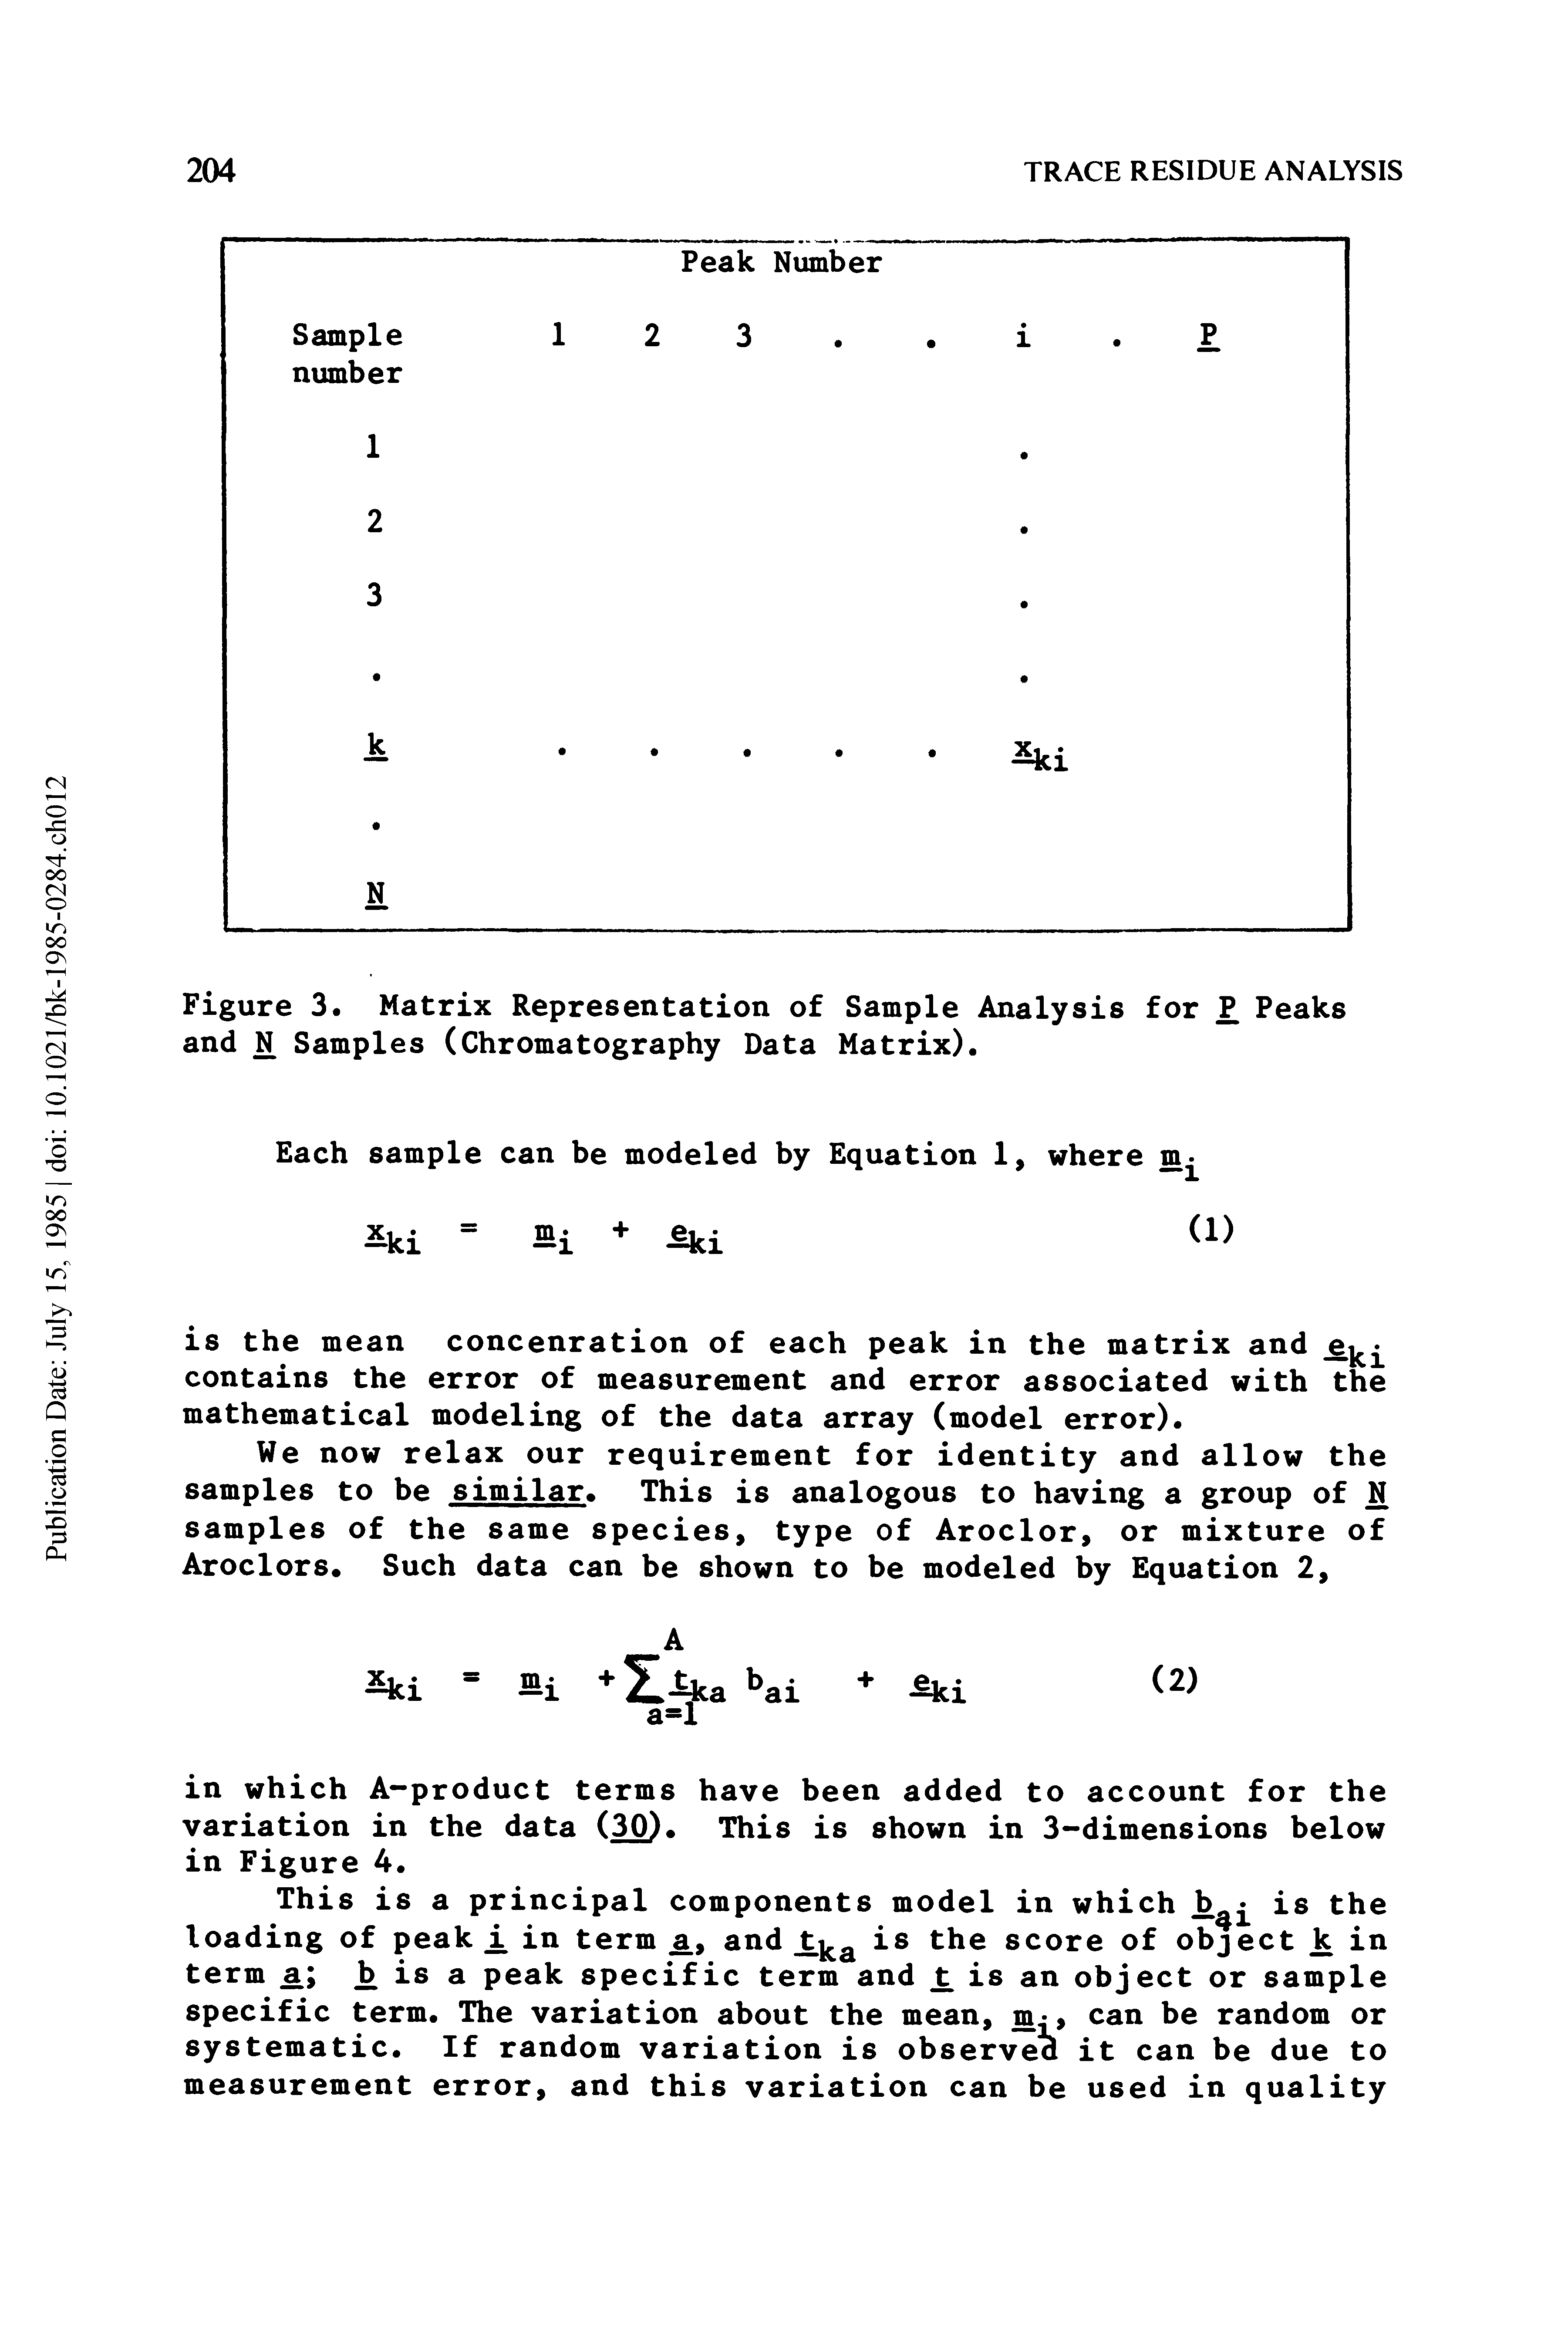 Figure 3. Matrix Representation of Sample Analysis for P, Peaks and N Samples (Chromatography Data Matrix).